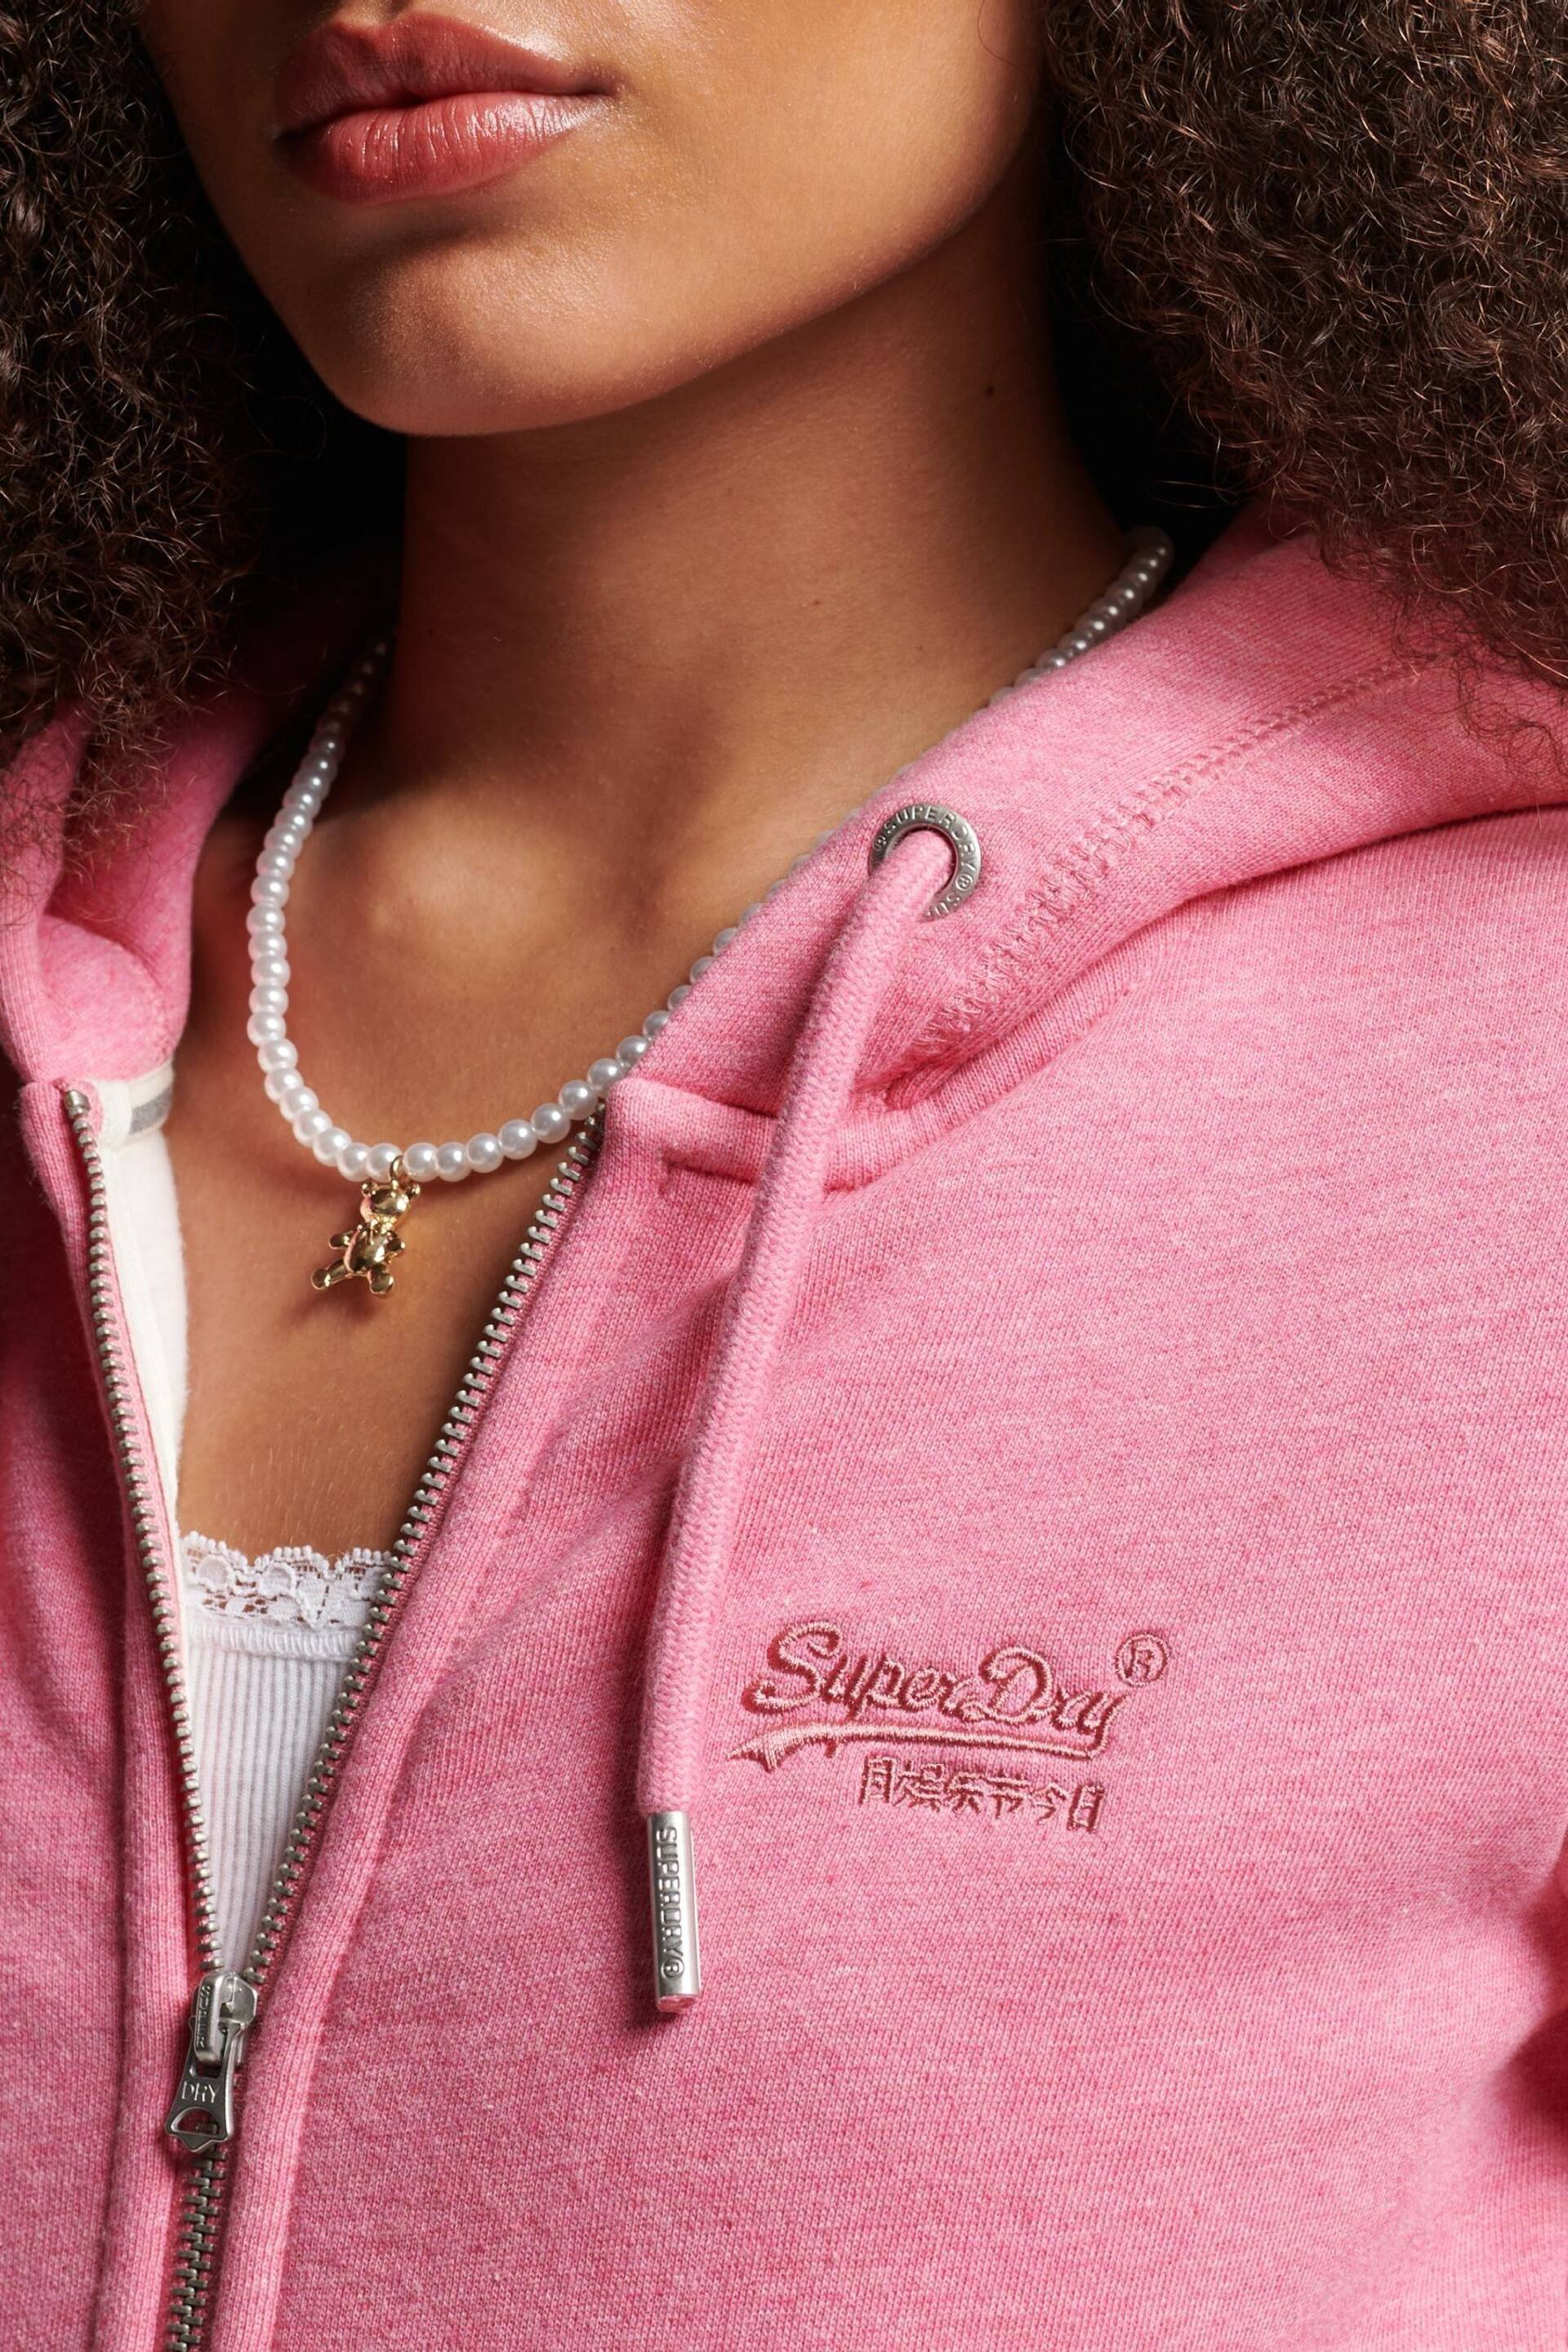 Superdry Blossom Pink Marl Vintage Logo Embroidered Zip-Up Hoodie - Image 5 of 6